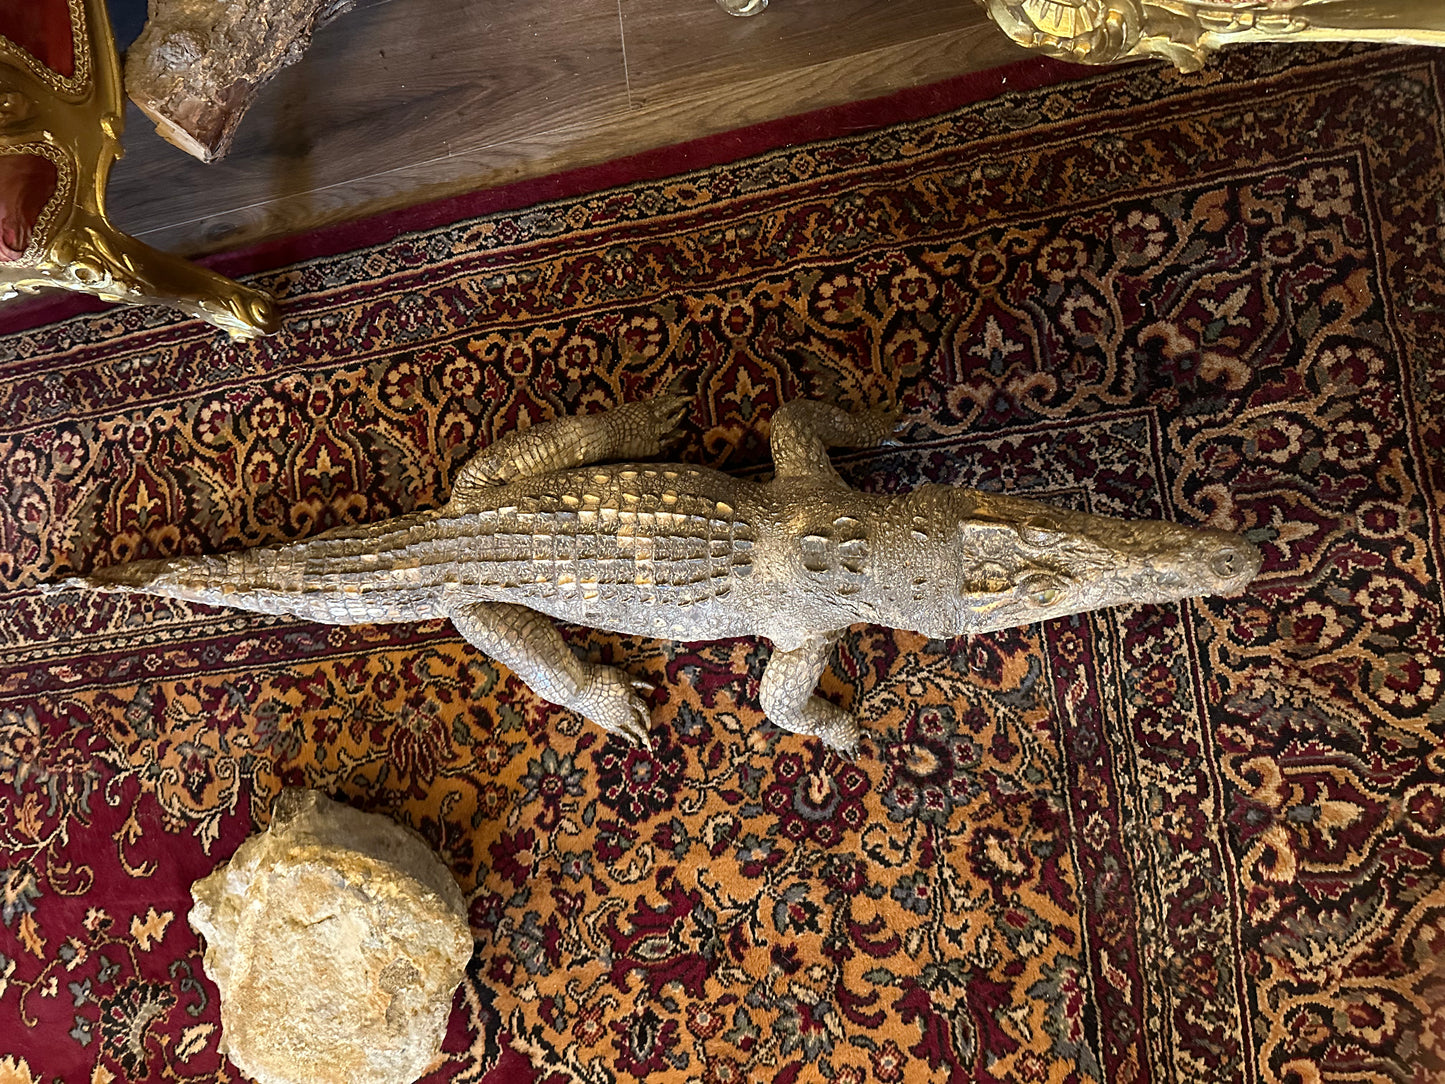 4 ft long crocodile taxidermy